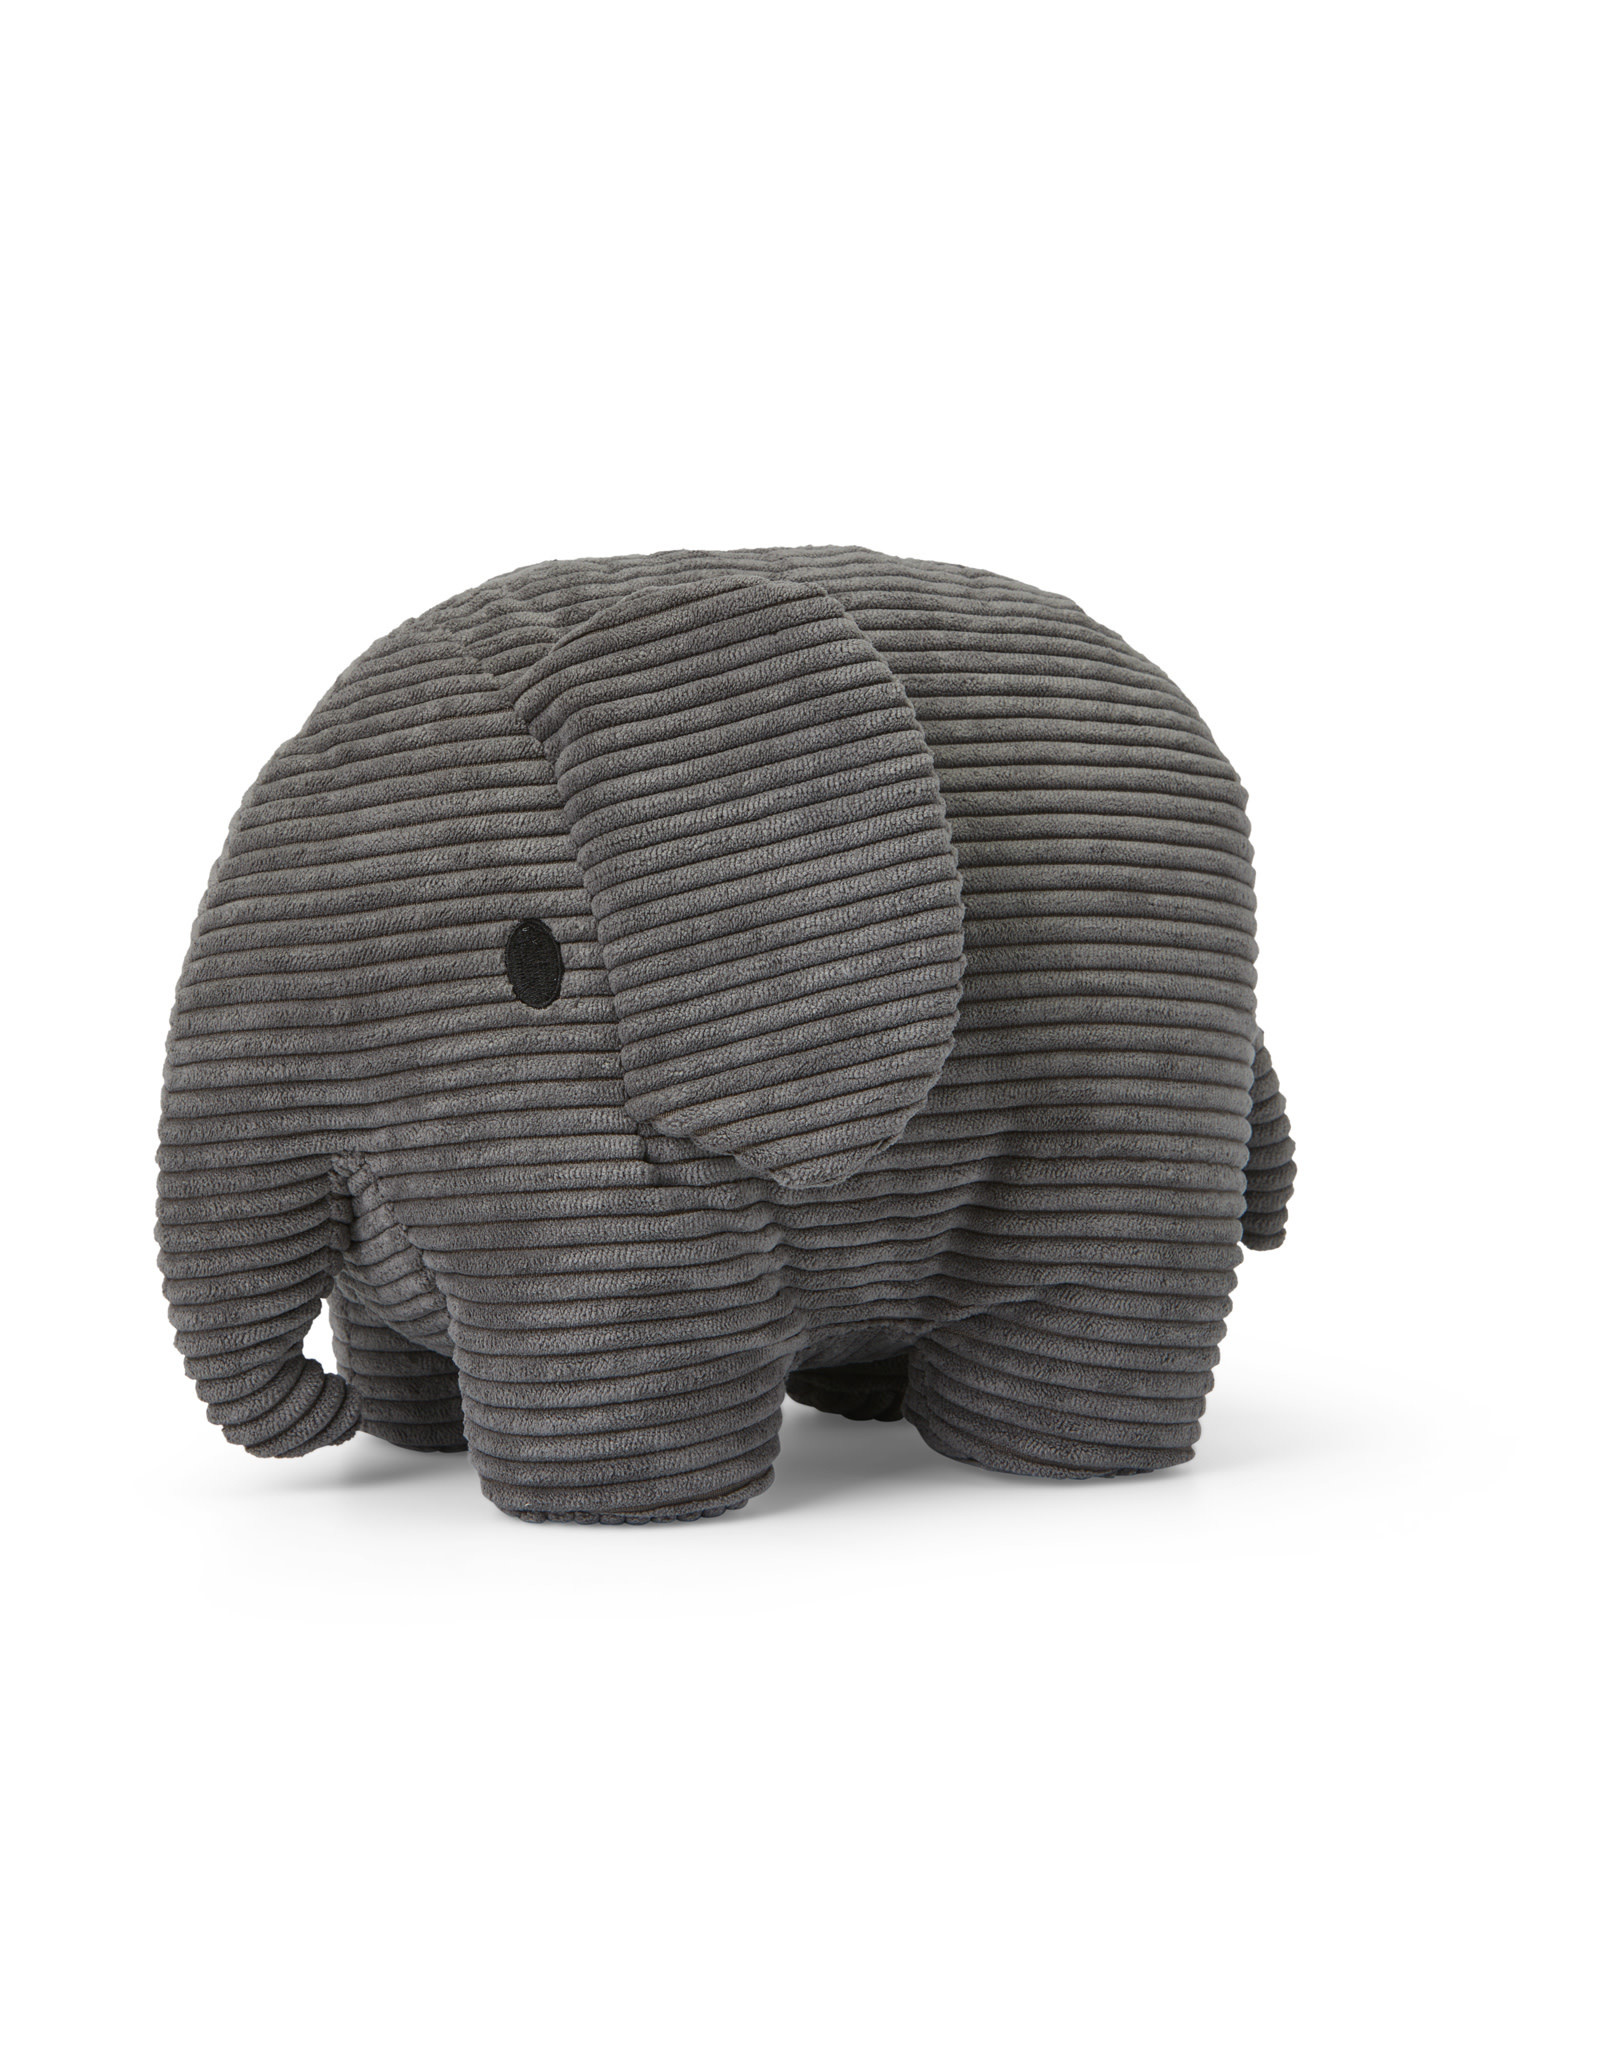 nijntje Elephant Corduroy Grey 33 cm